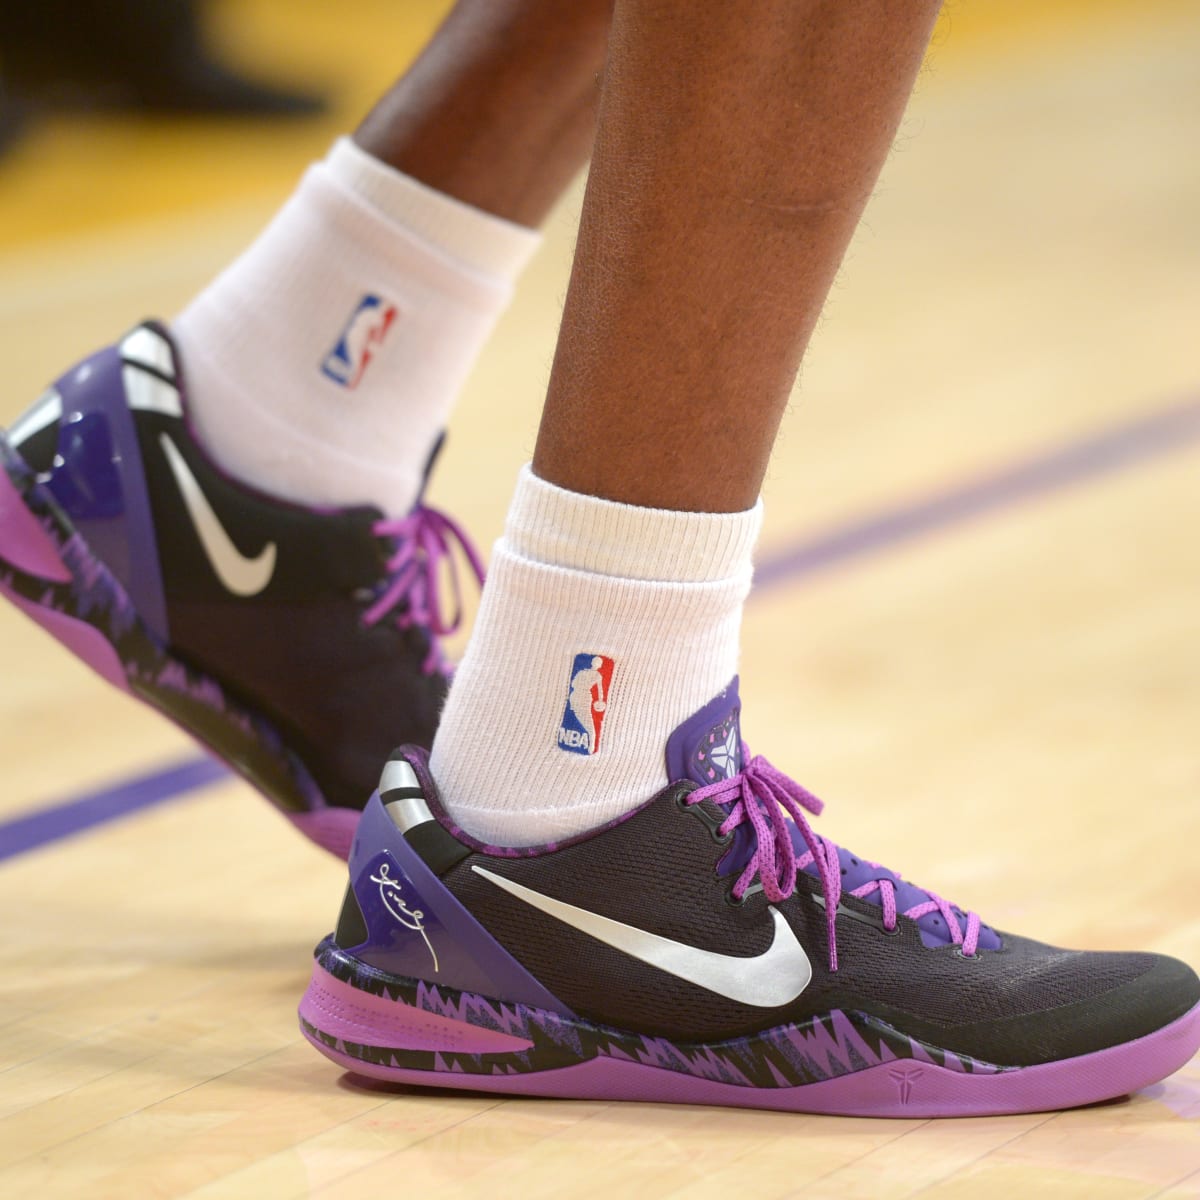 Kobe Bryant Shoes Pictures: Nike Hyperdunk Kobe Bryant PE Olympics